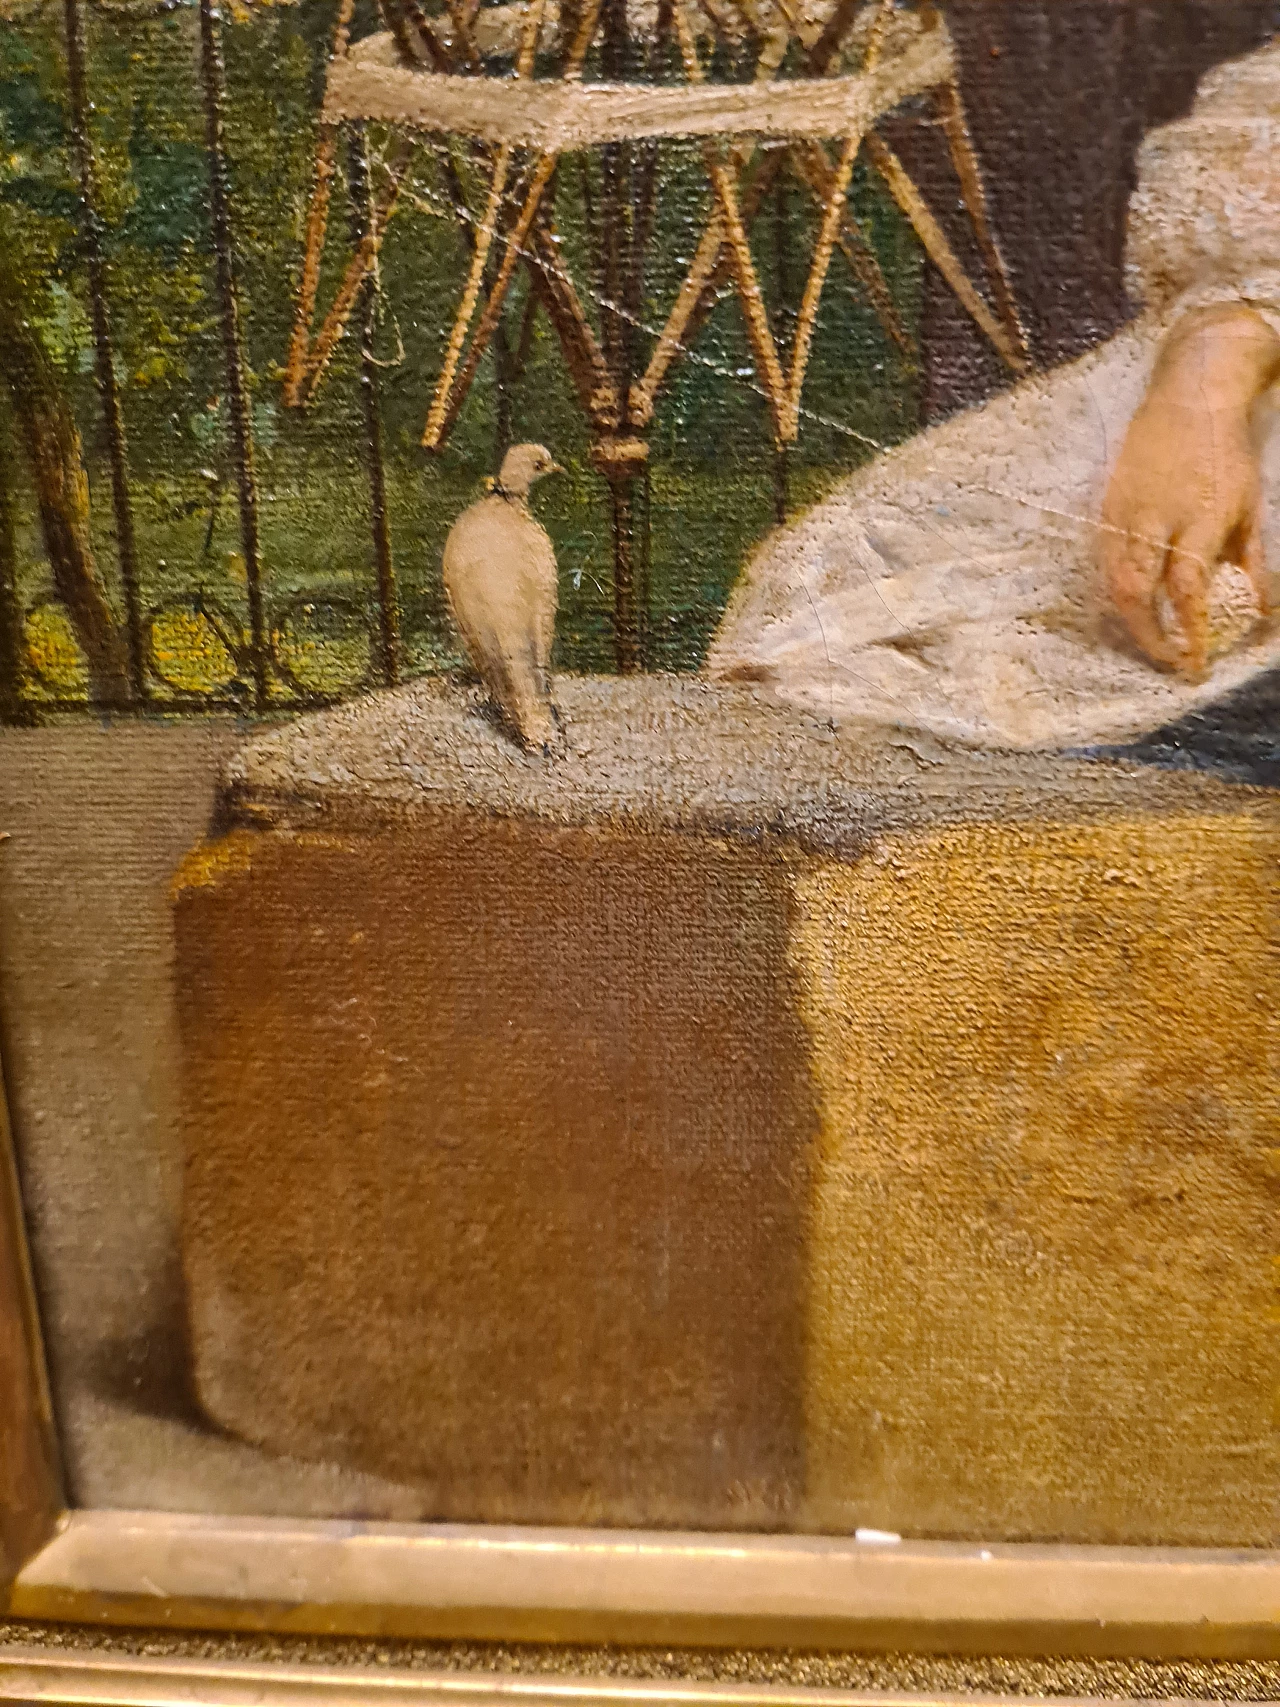 Pietro Bouvier, painting oil on canvas, 1867 6